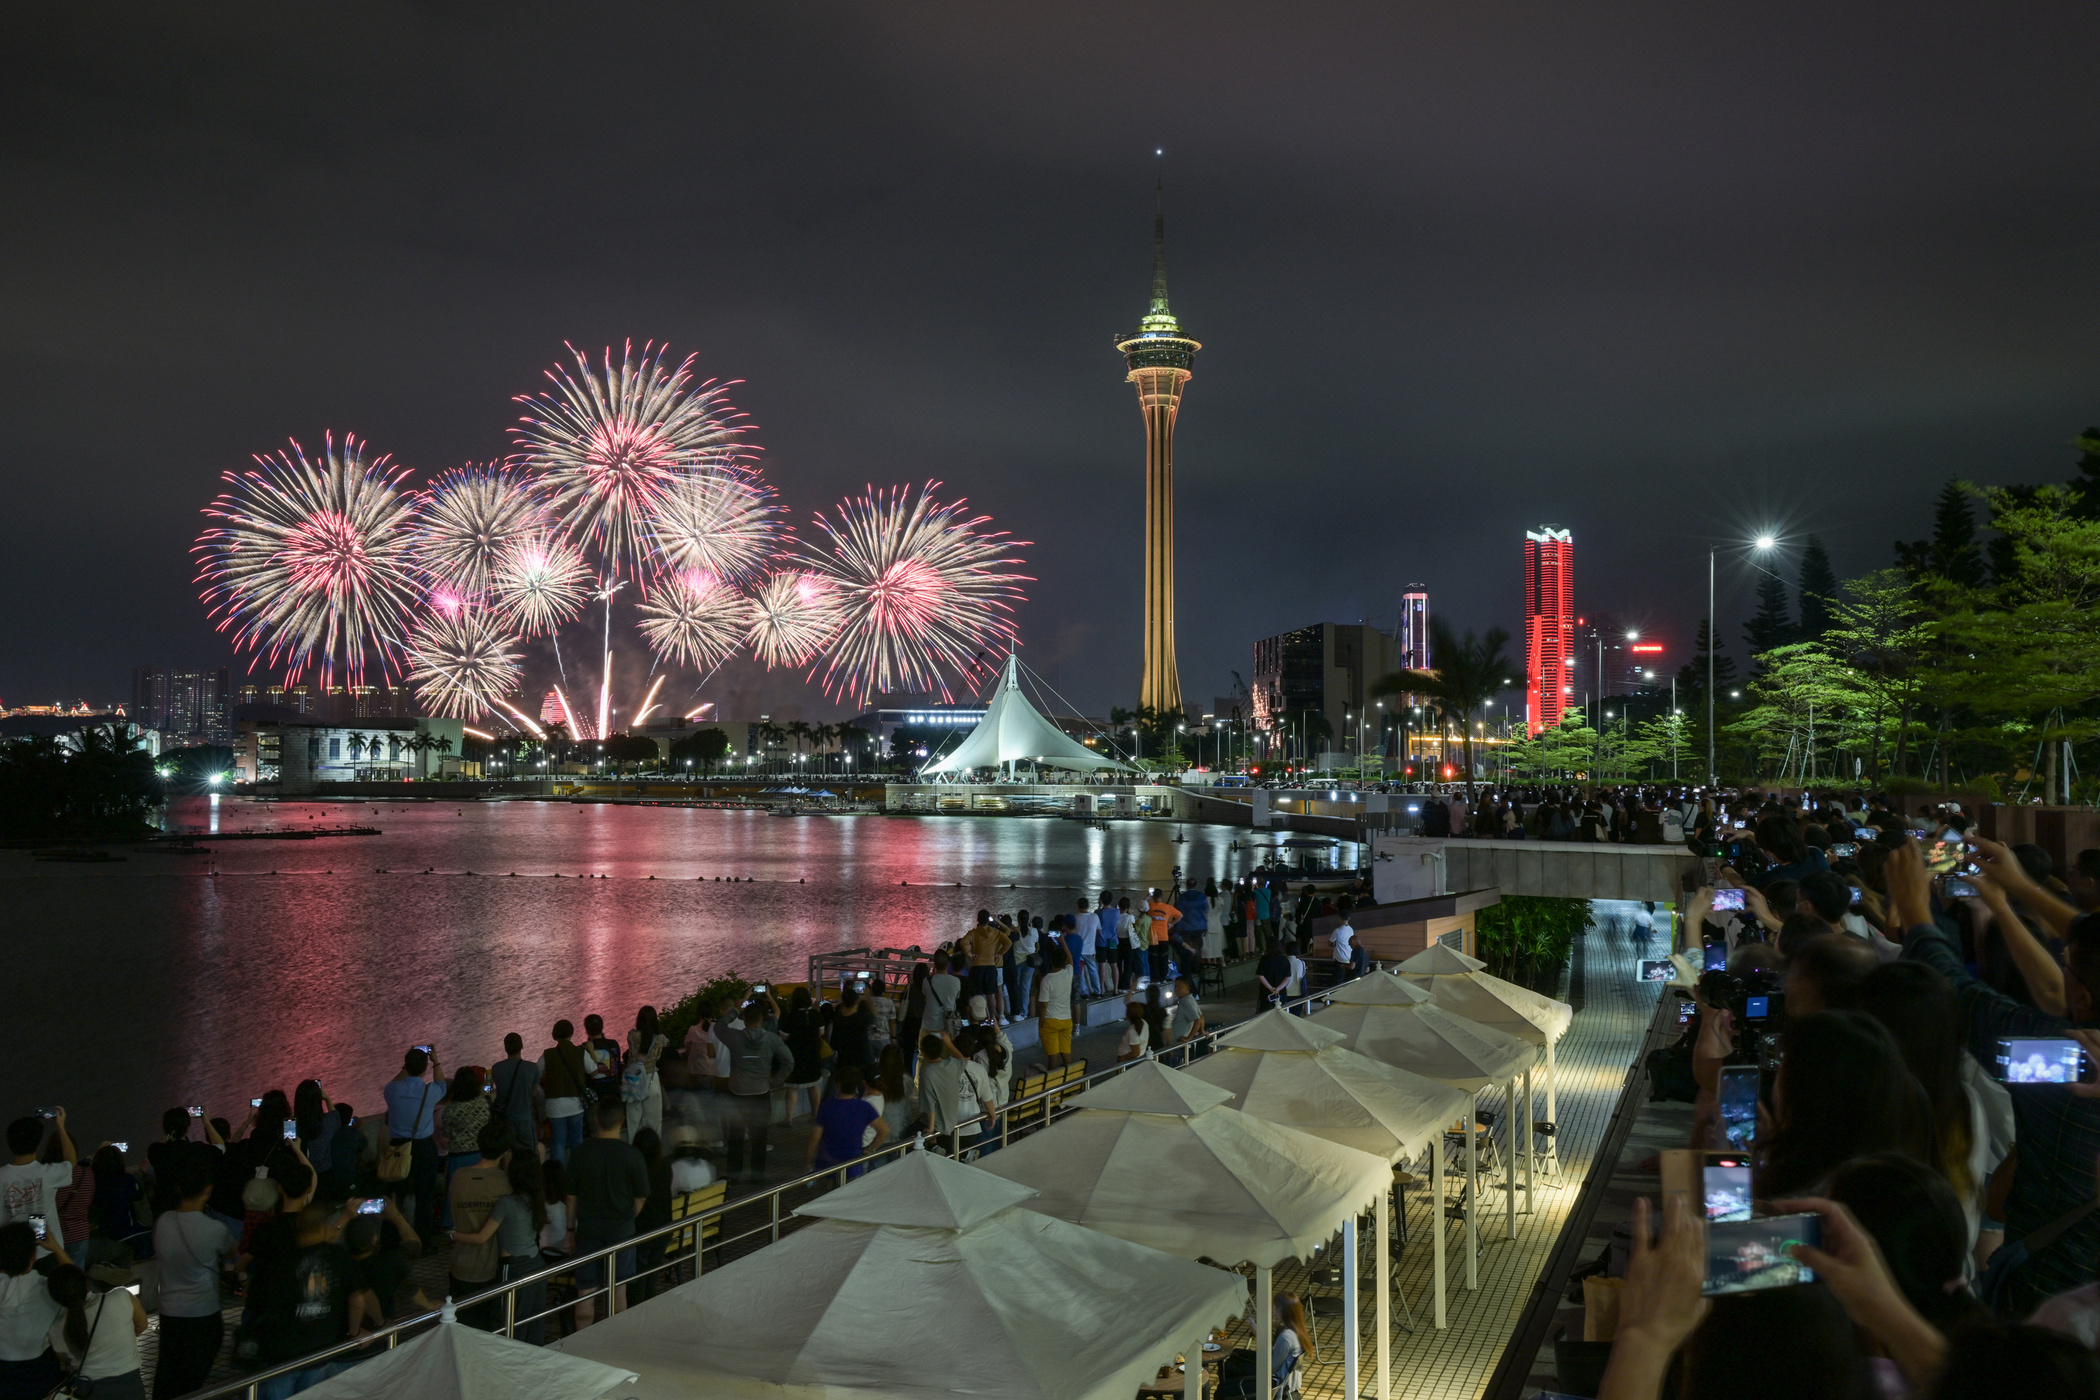 UK team wins 31st Macao International Fireworks Display Contest